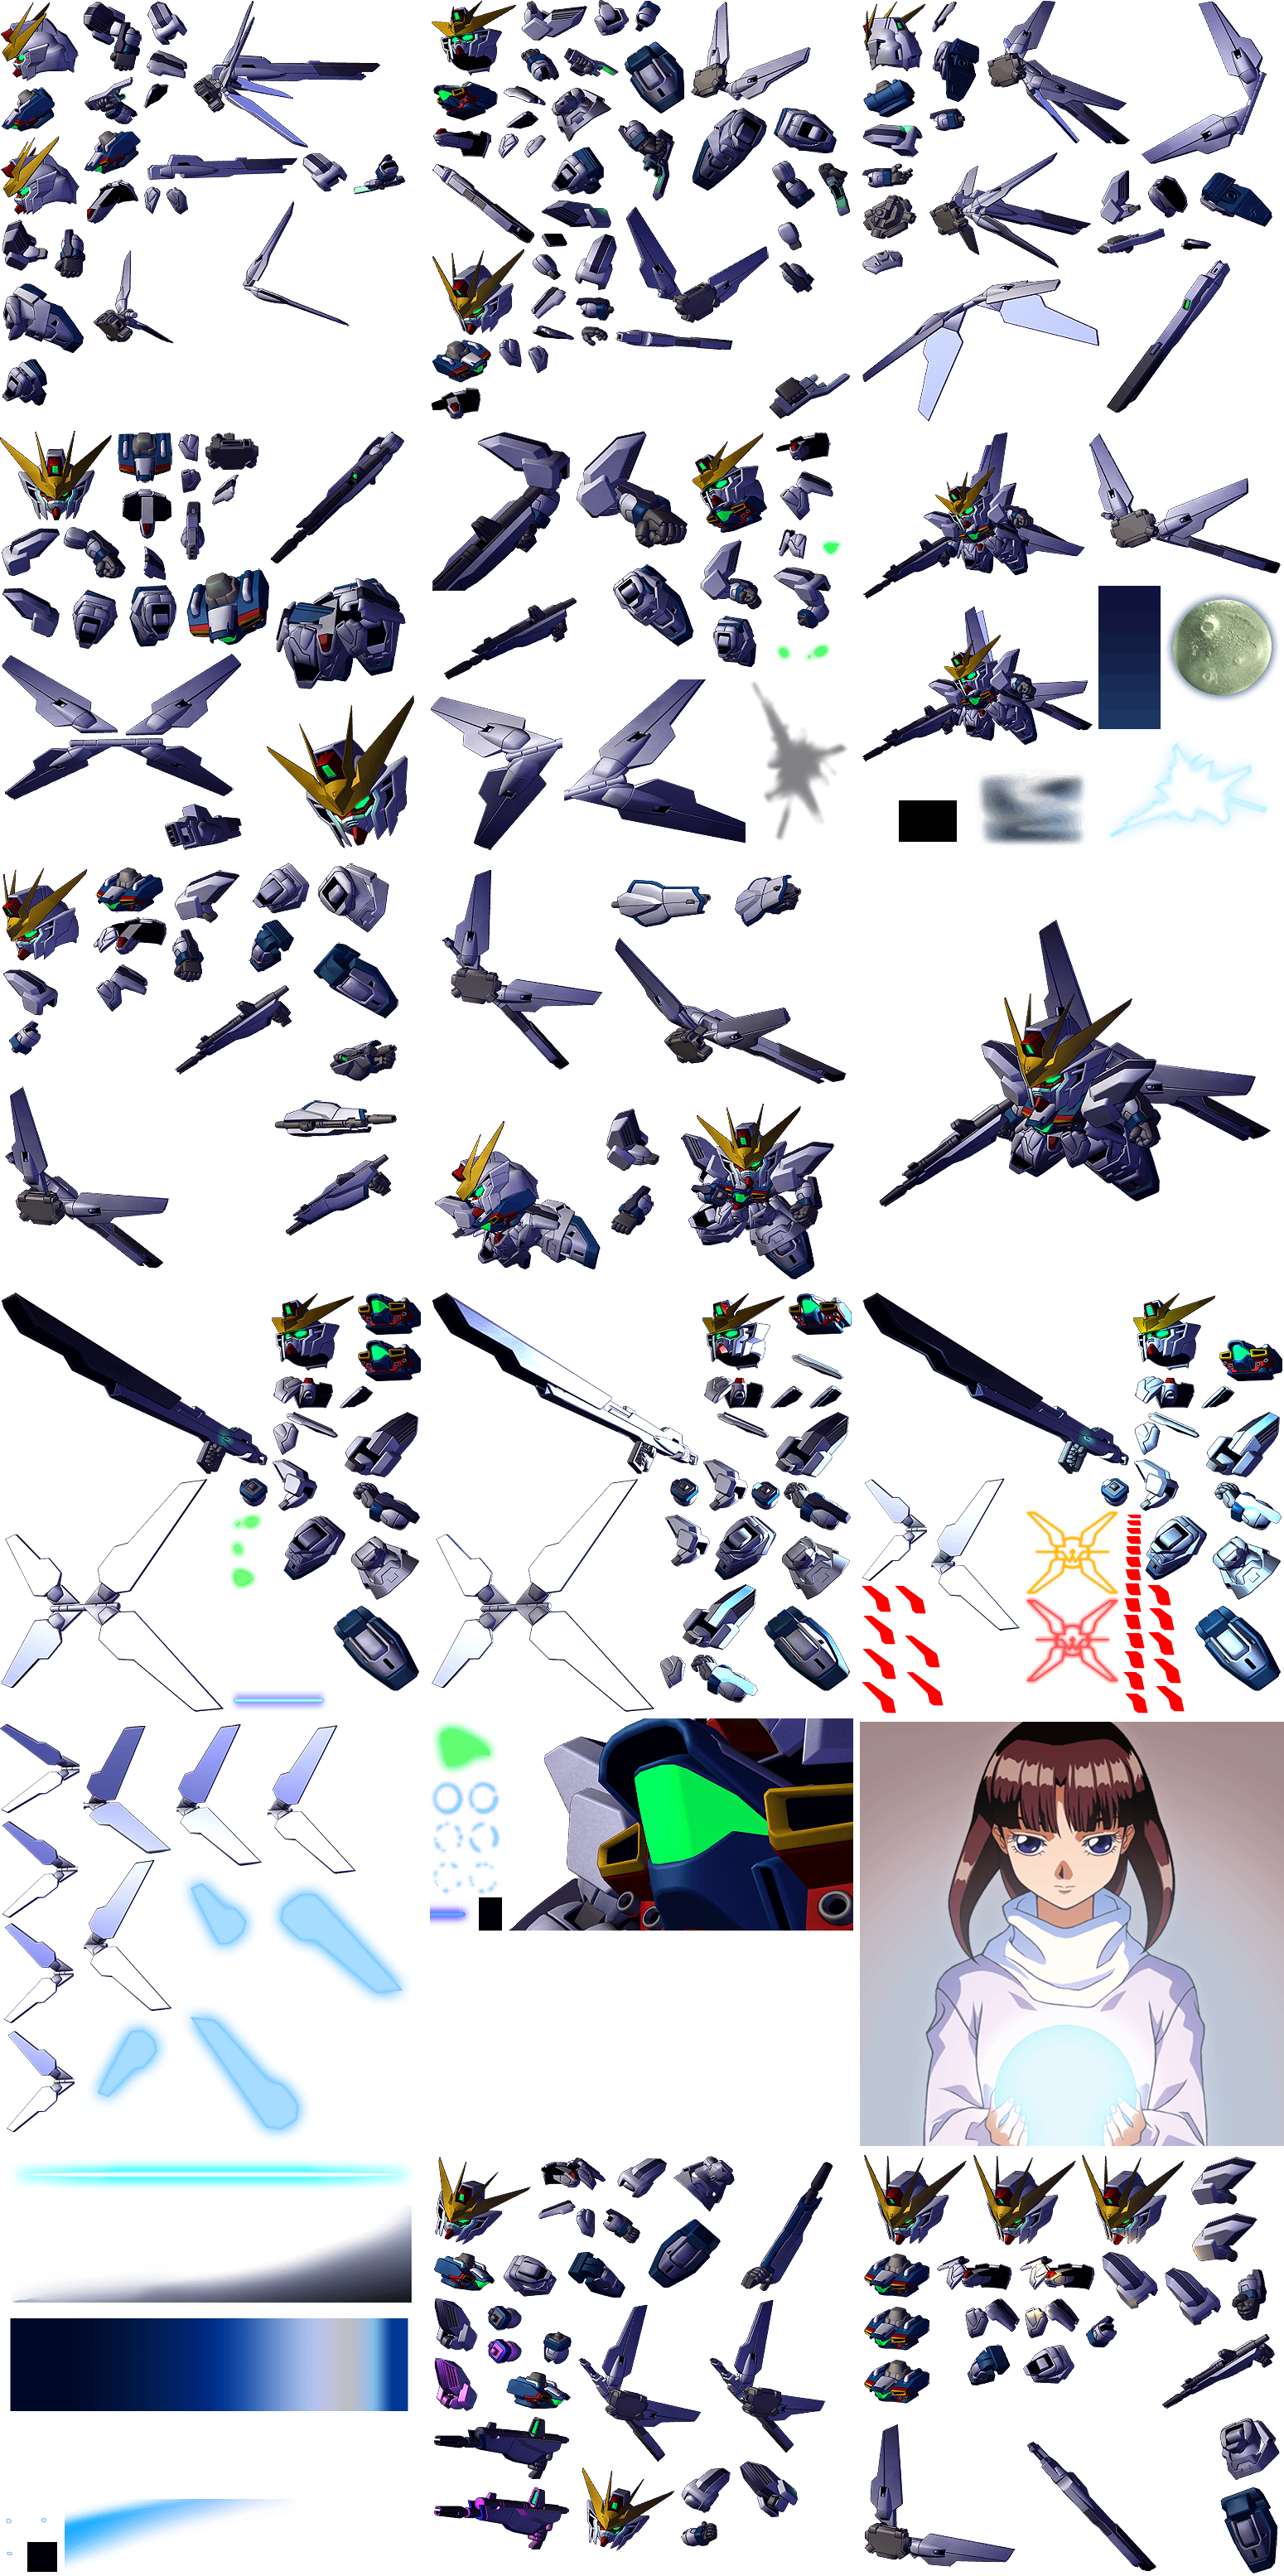 SD Gundam G Generation Wars - X Gundam